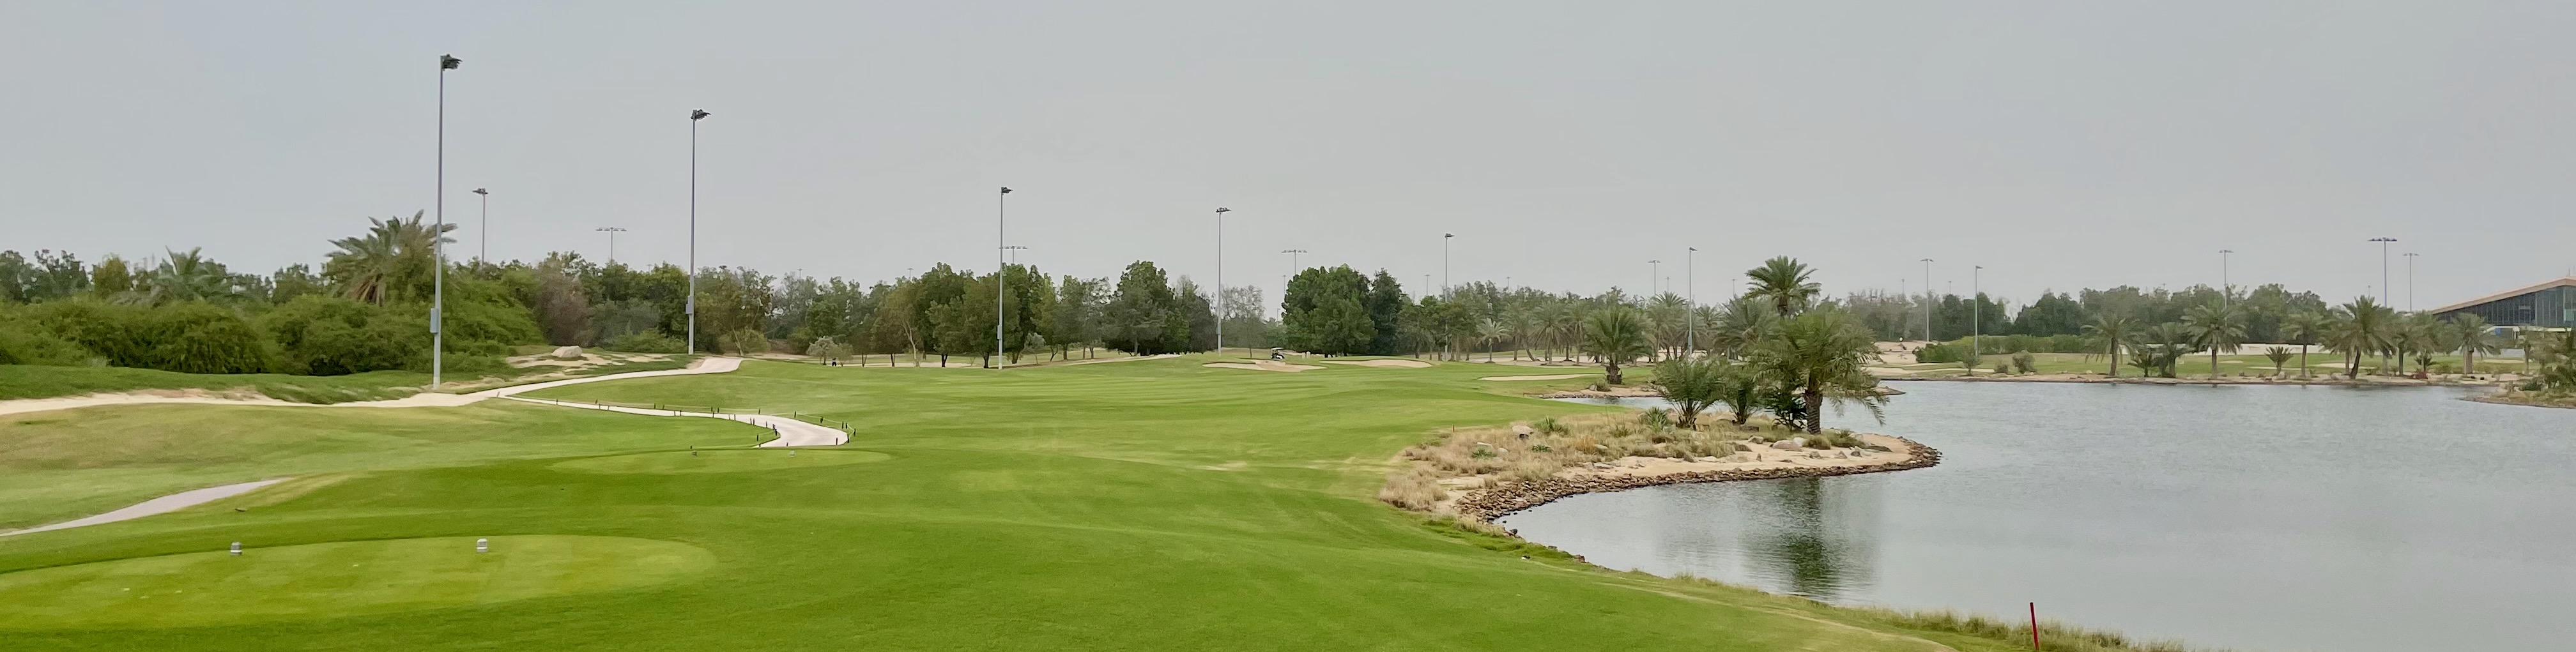 Abu Dhabi GC- hole 18 tee